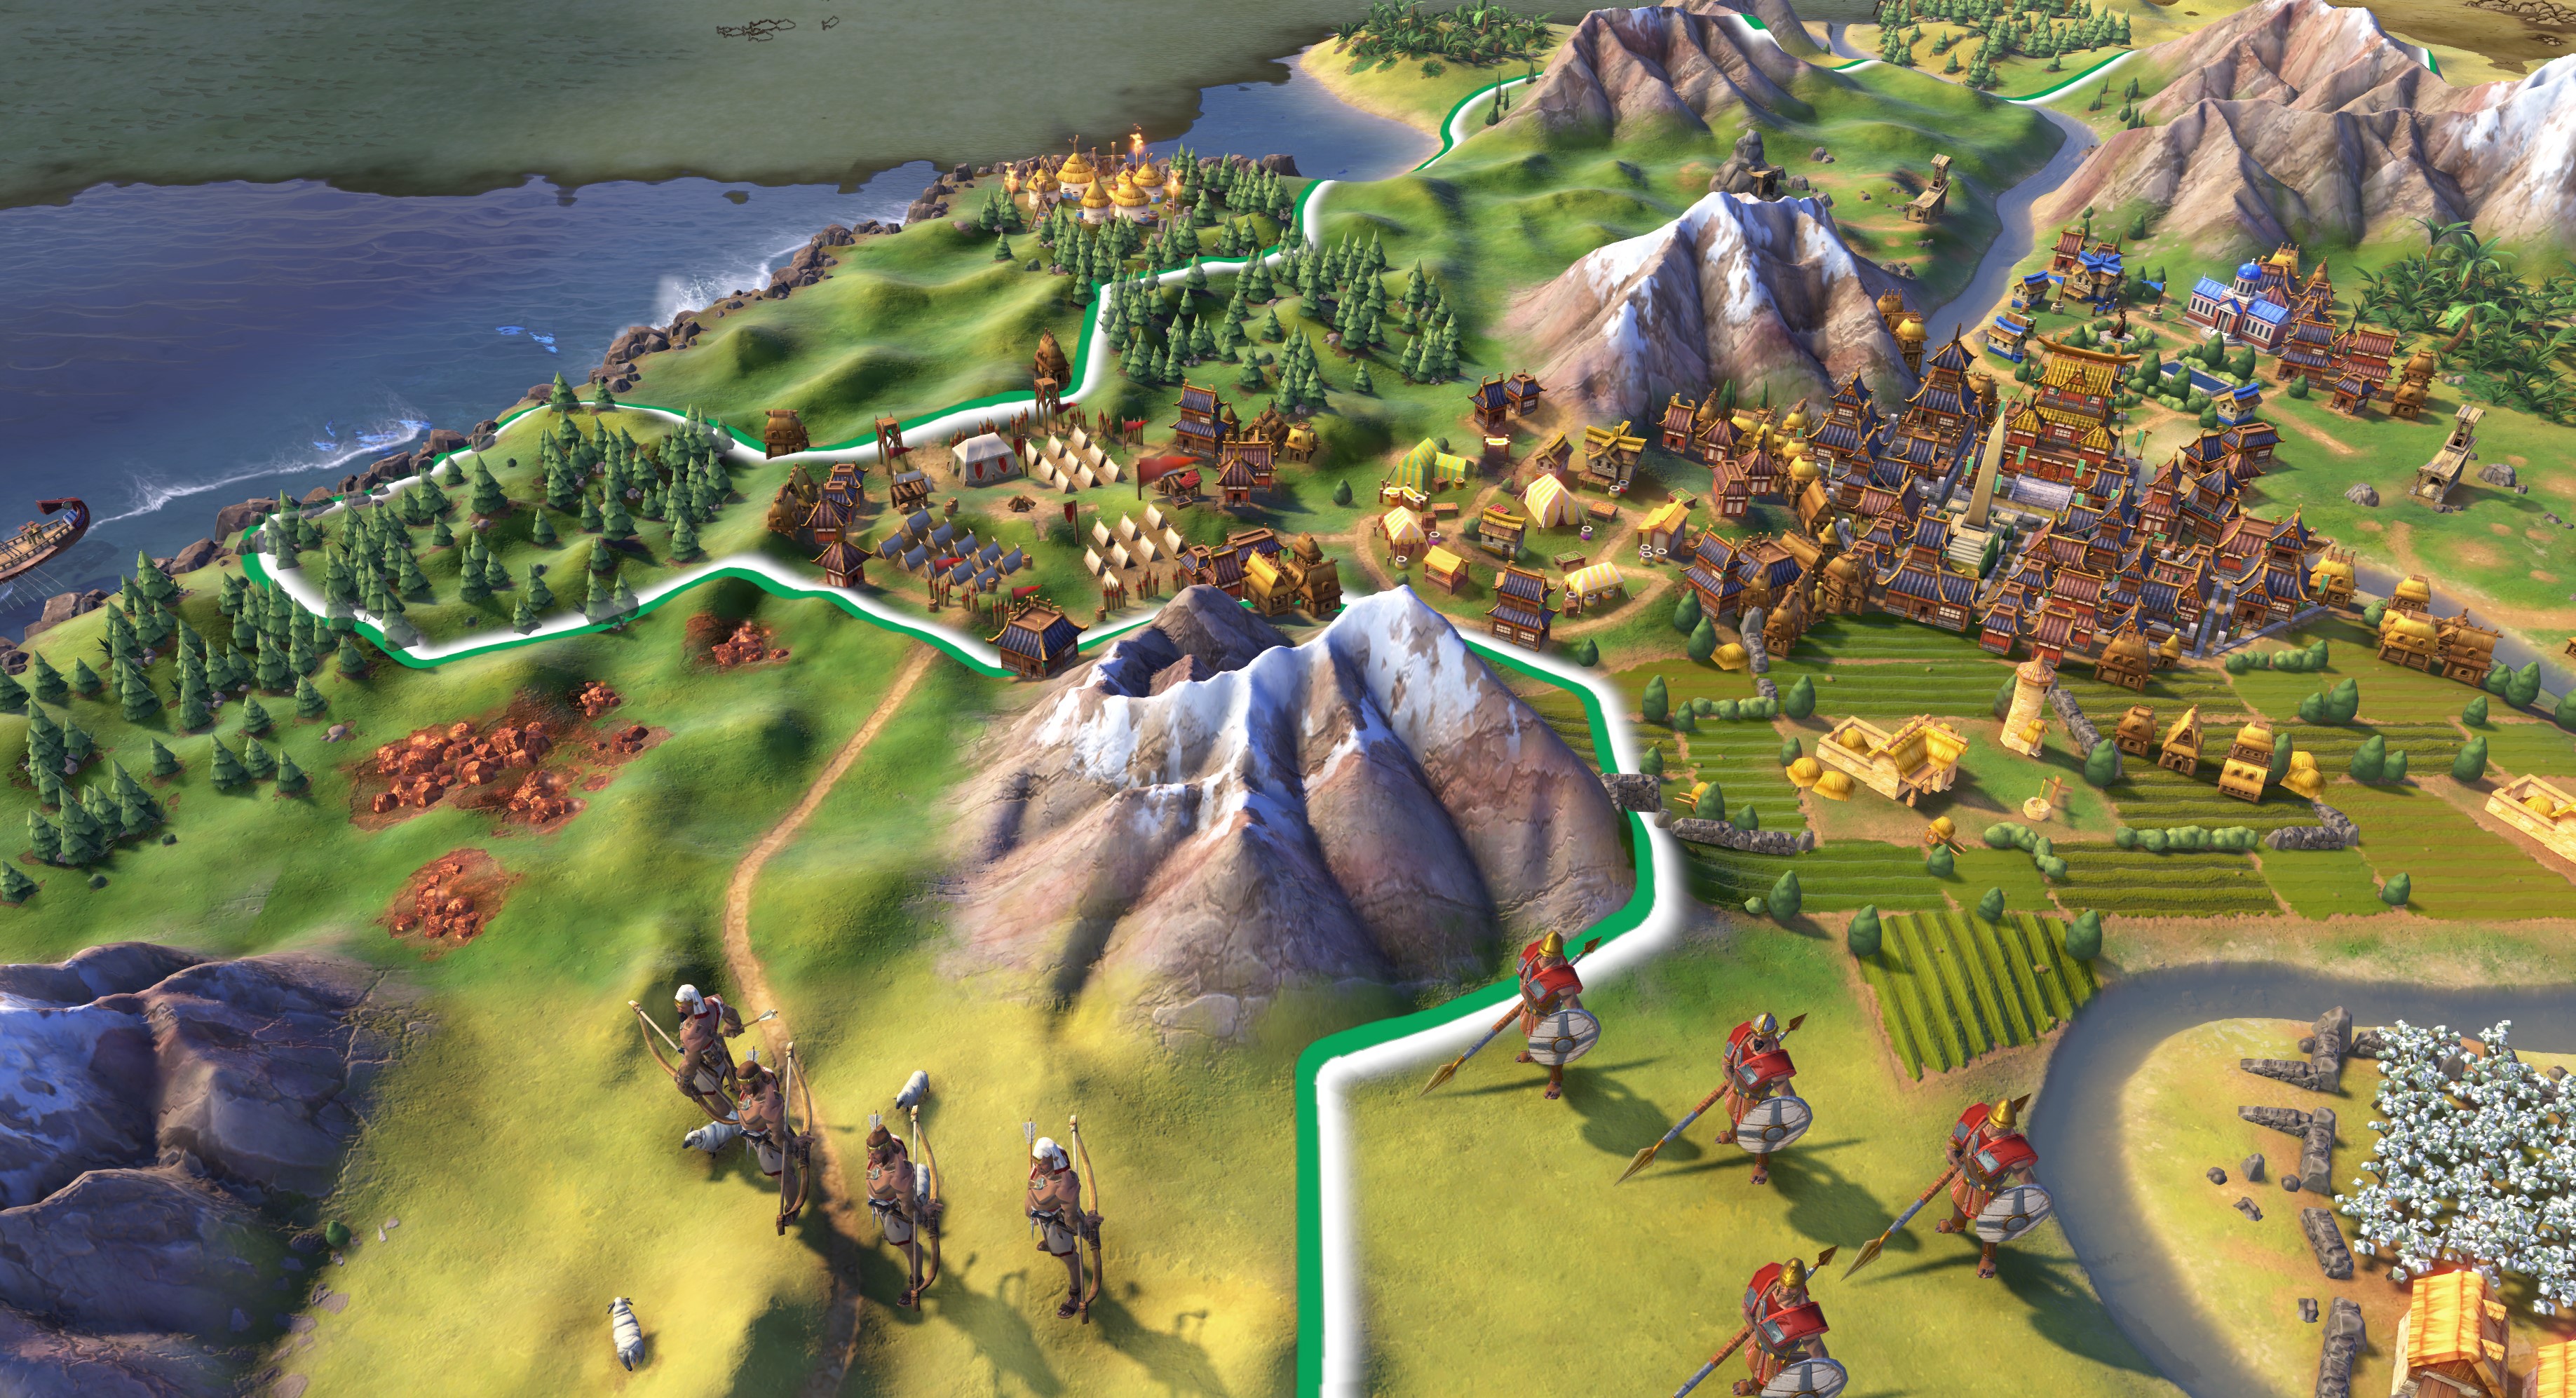 A battle underway next to a growing city in Sid Meier’s Civilization VI